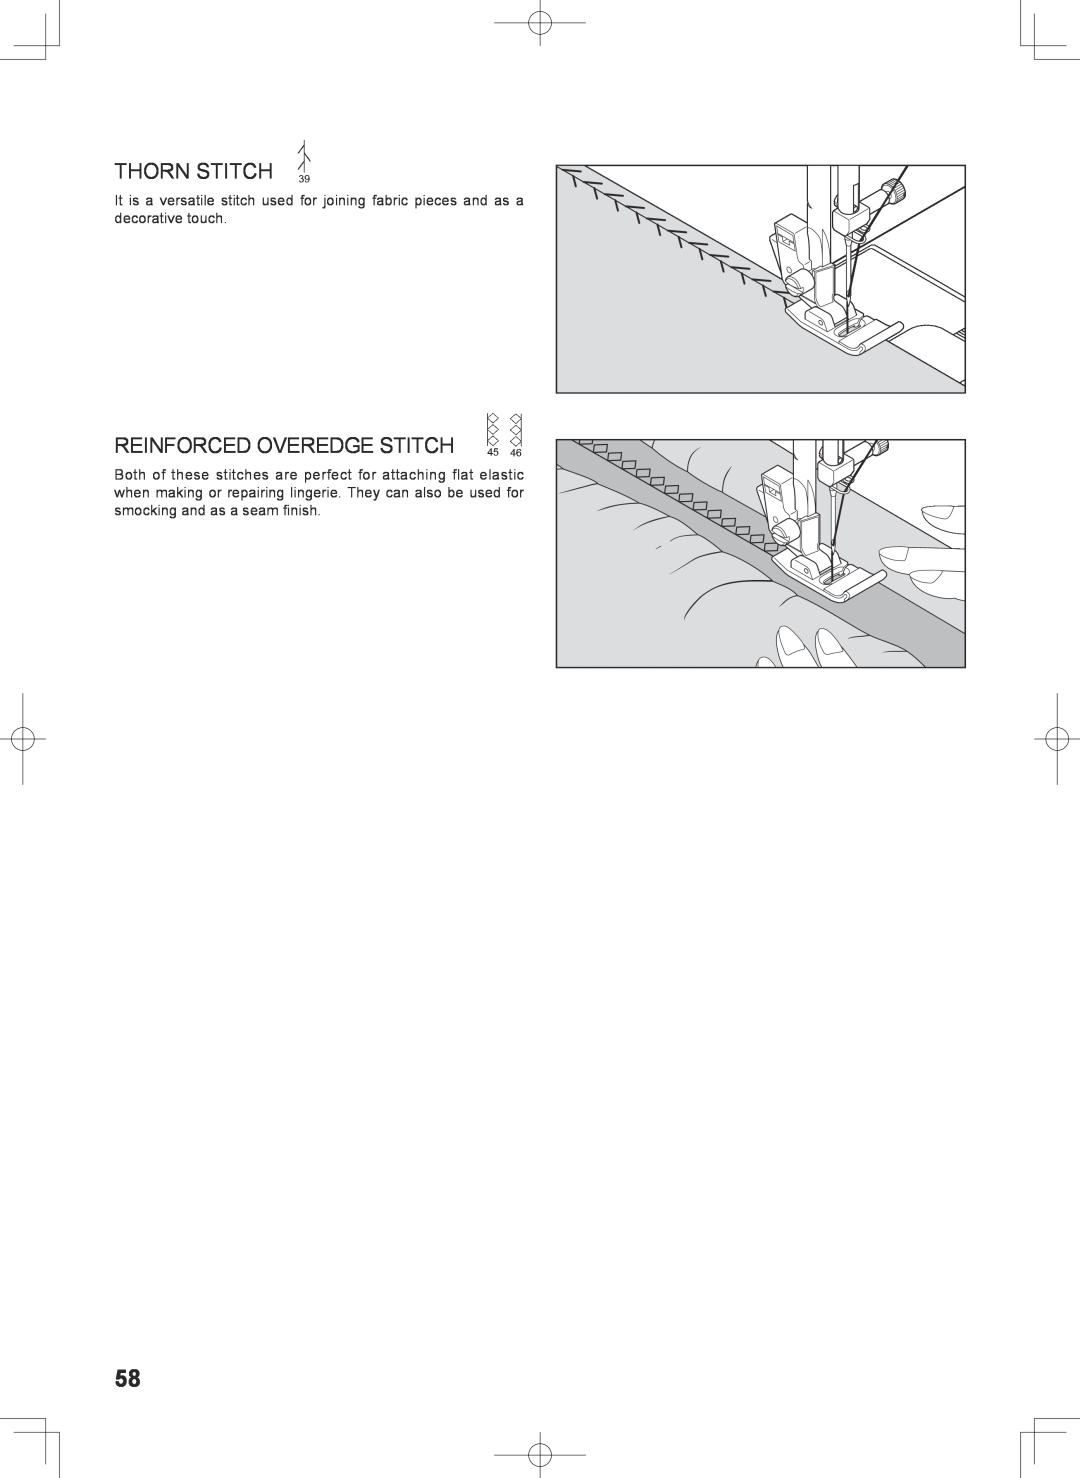 Singer 7467S instruction manual Thorn Stitch, Reinforced Overedge Stitch 